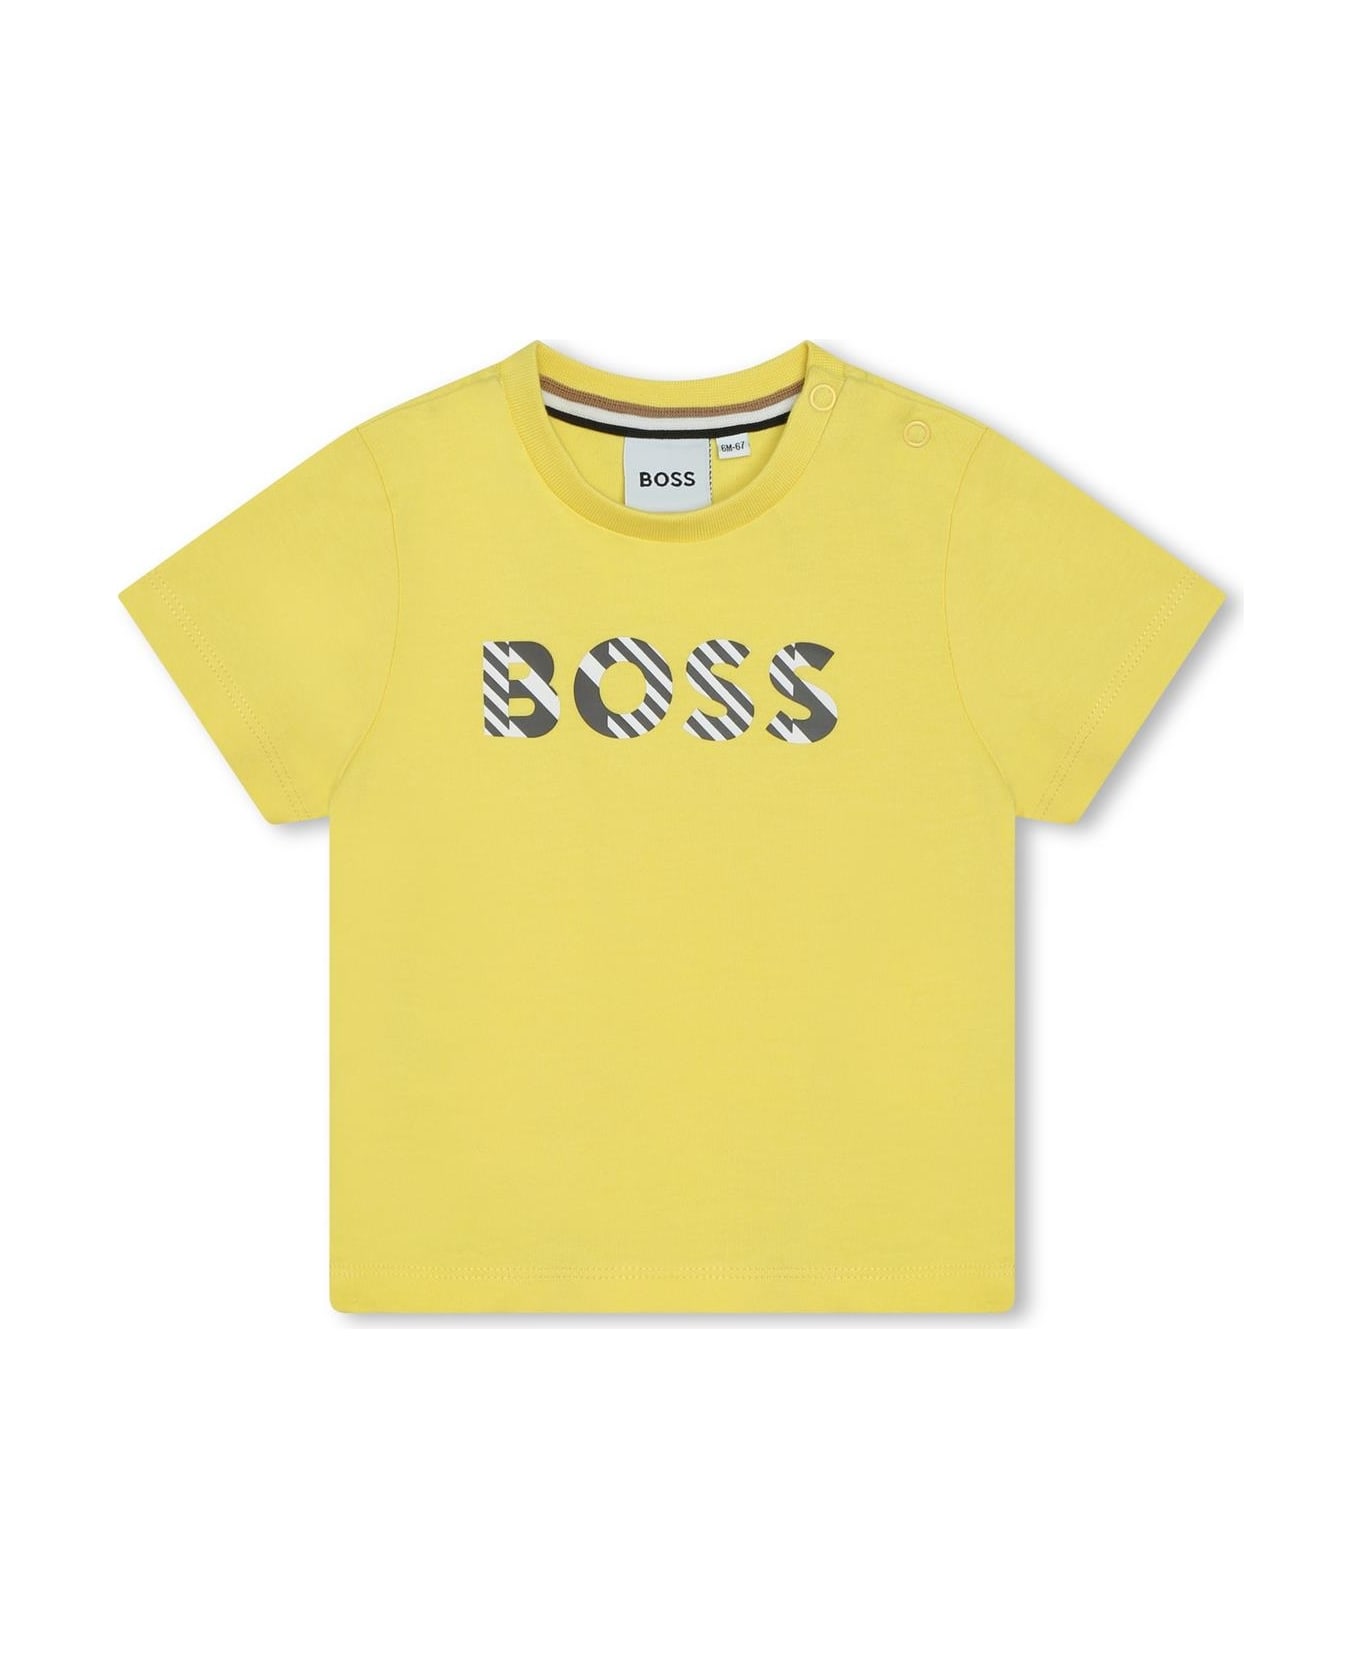 Hugo Boss T-shirt With Print - Yellow